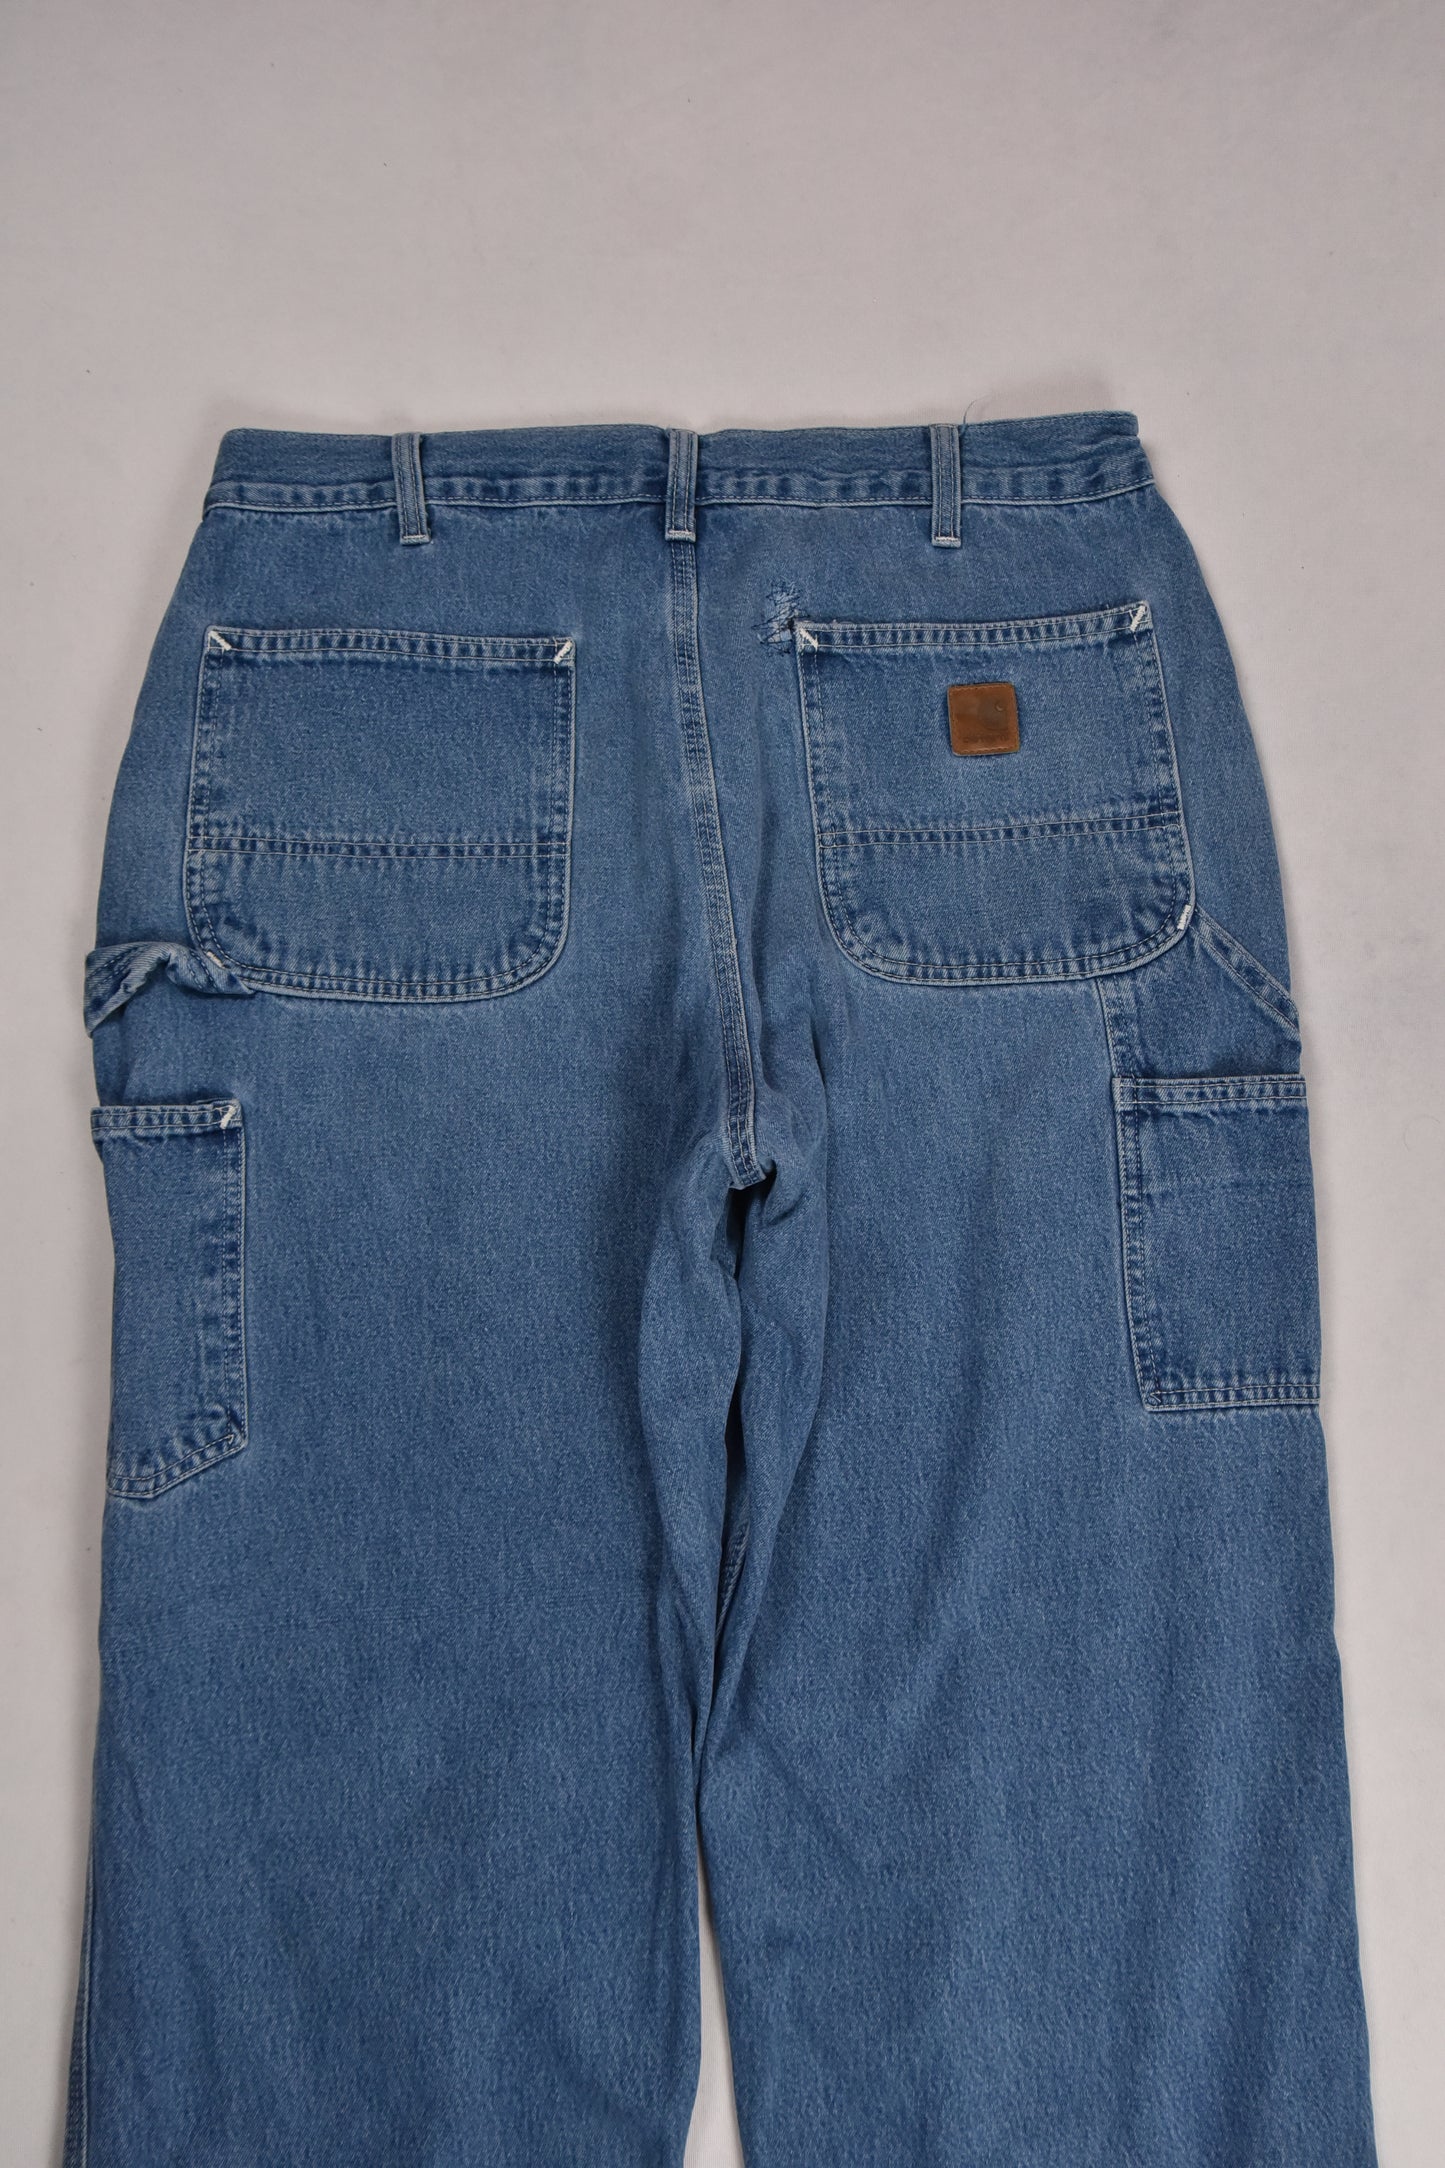 Carhartt Workwear Jeans Vintage / 34x34